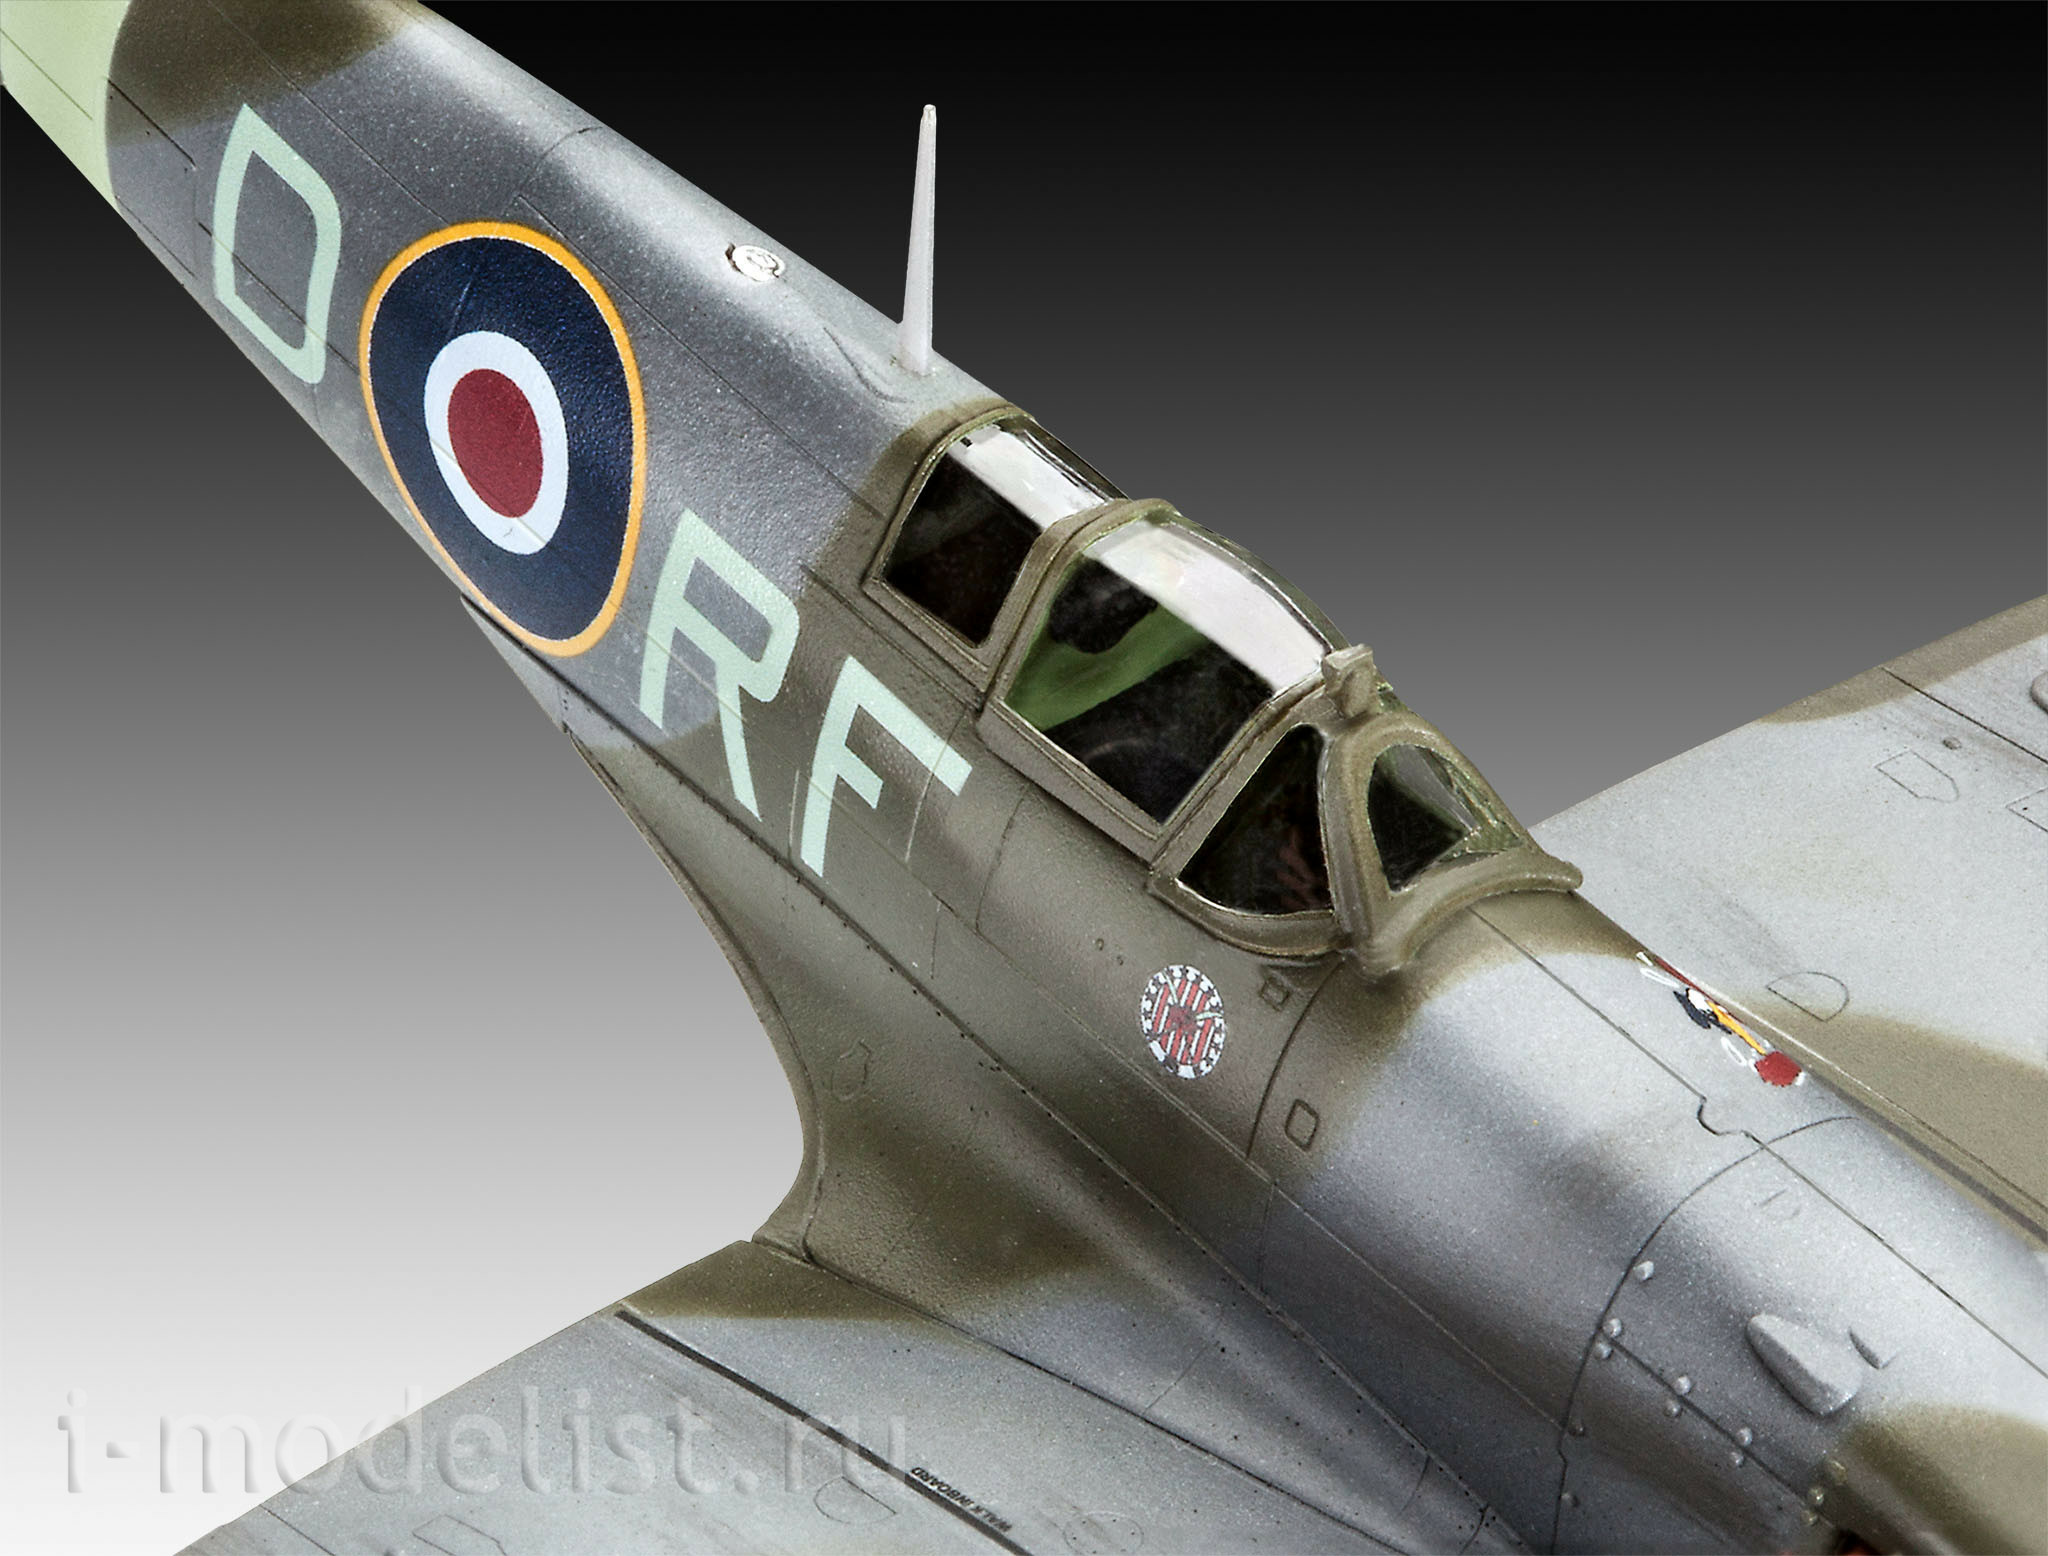 03897 Revell 1/72 Британский истребитель Supermarine Spitfire Mk.Vb